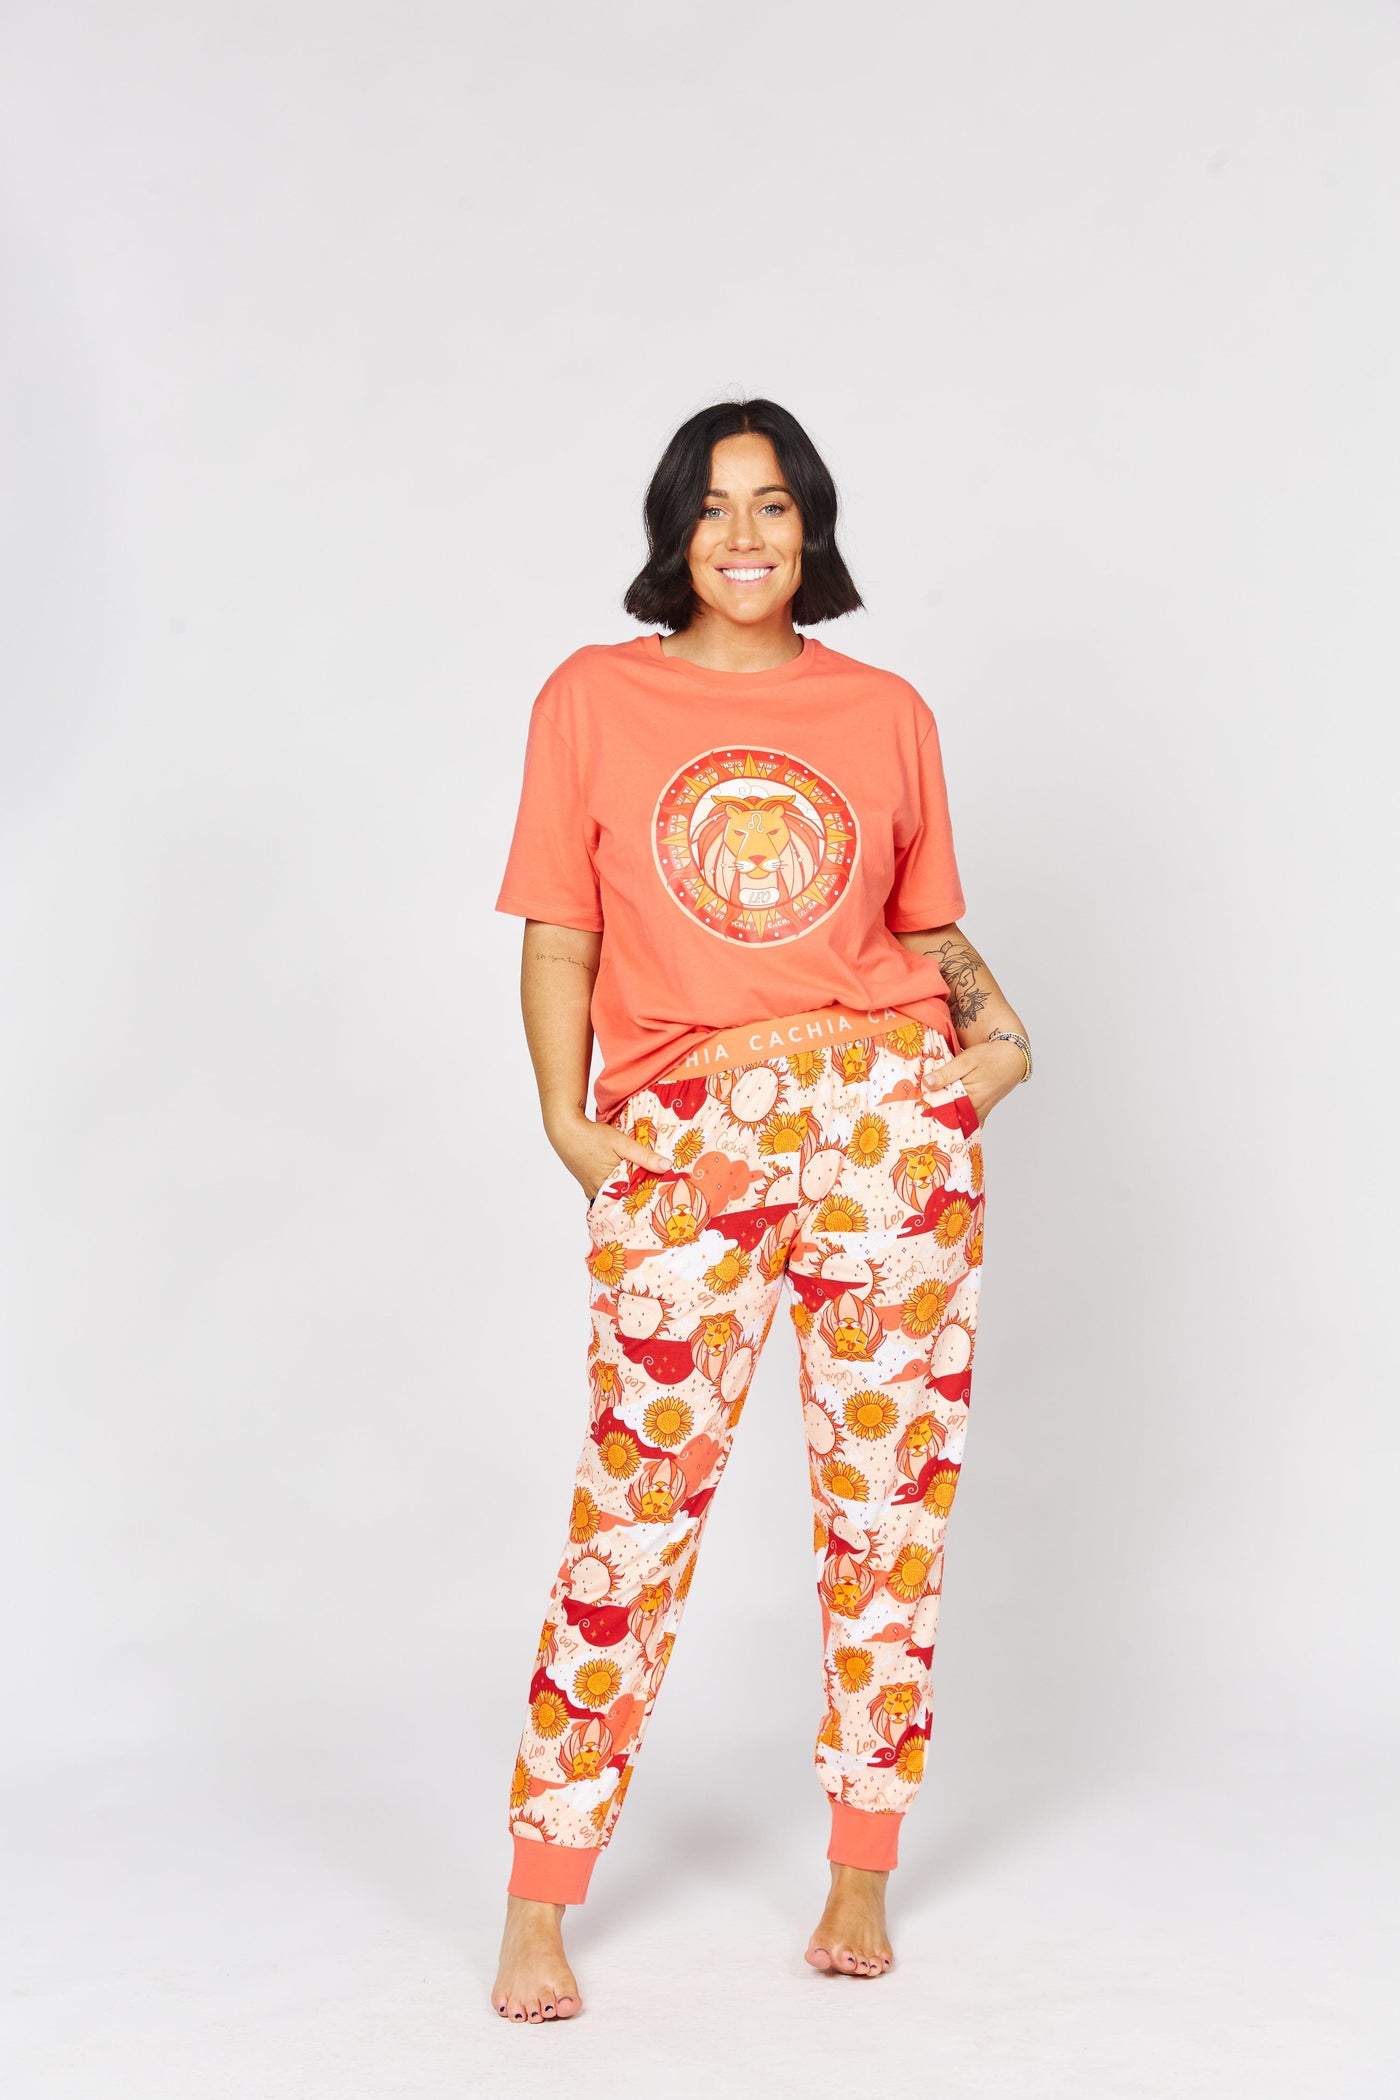 Cachia Leo - Zodiac Pyjama Set Pajamas